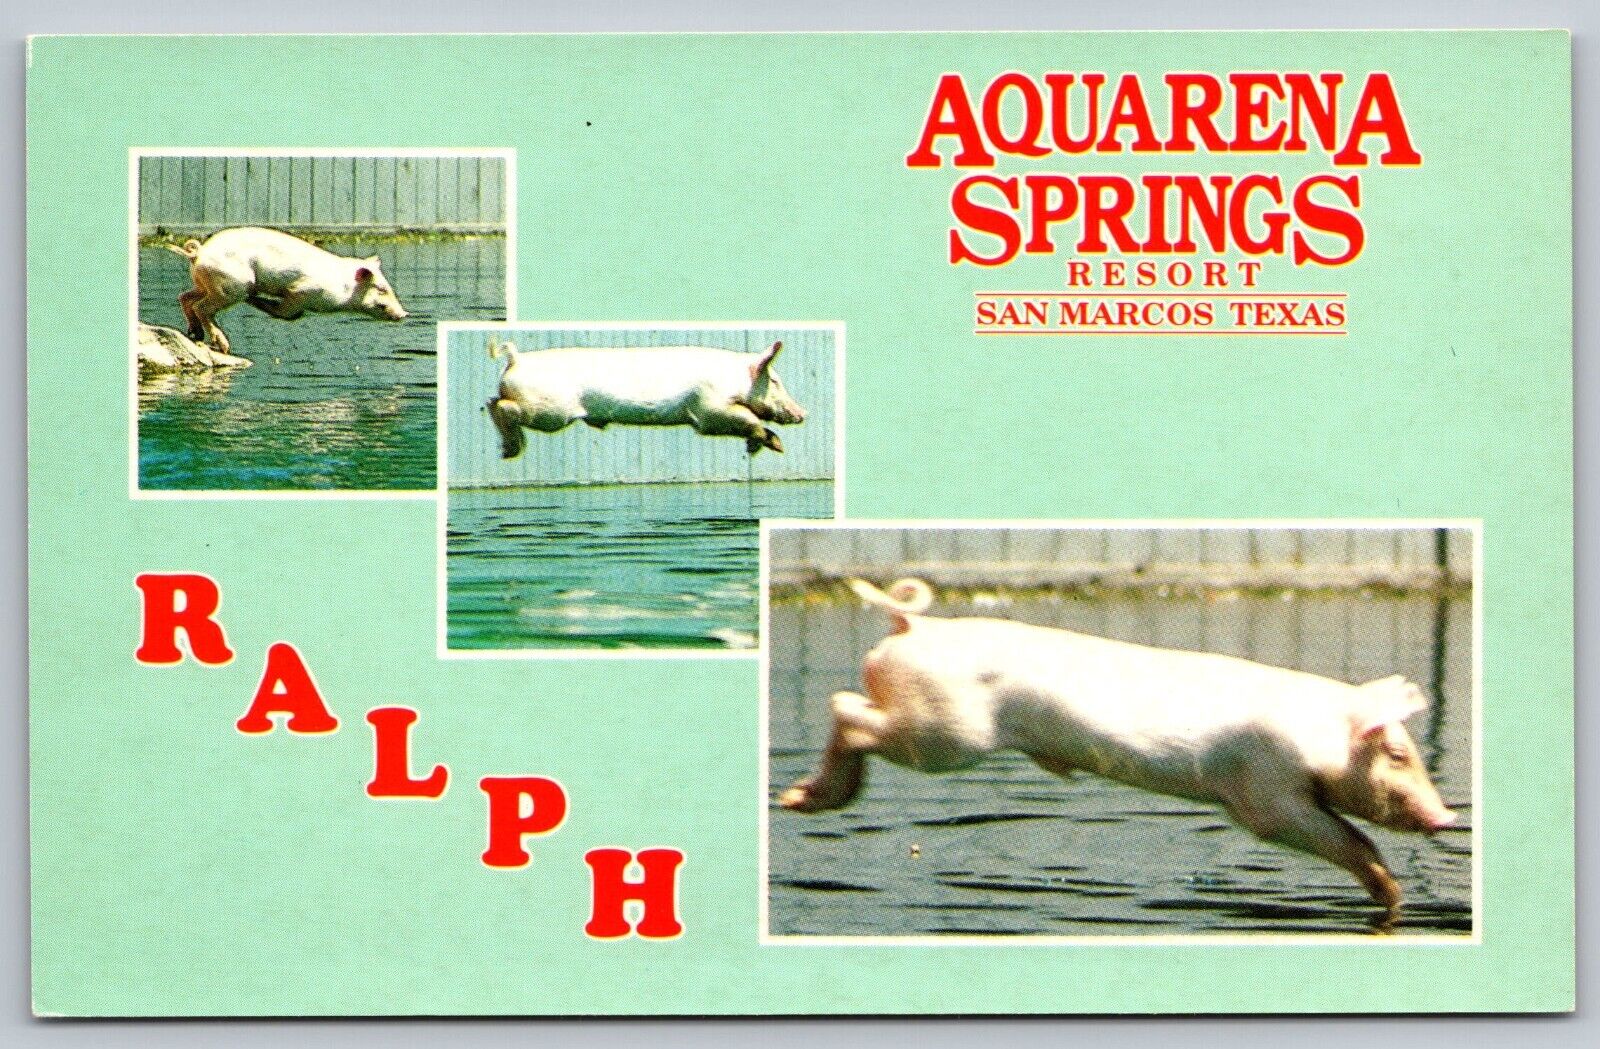 Postcard Ralph The Swimming Pig Aquarena Springs Resort San Marcos Texas A14